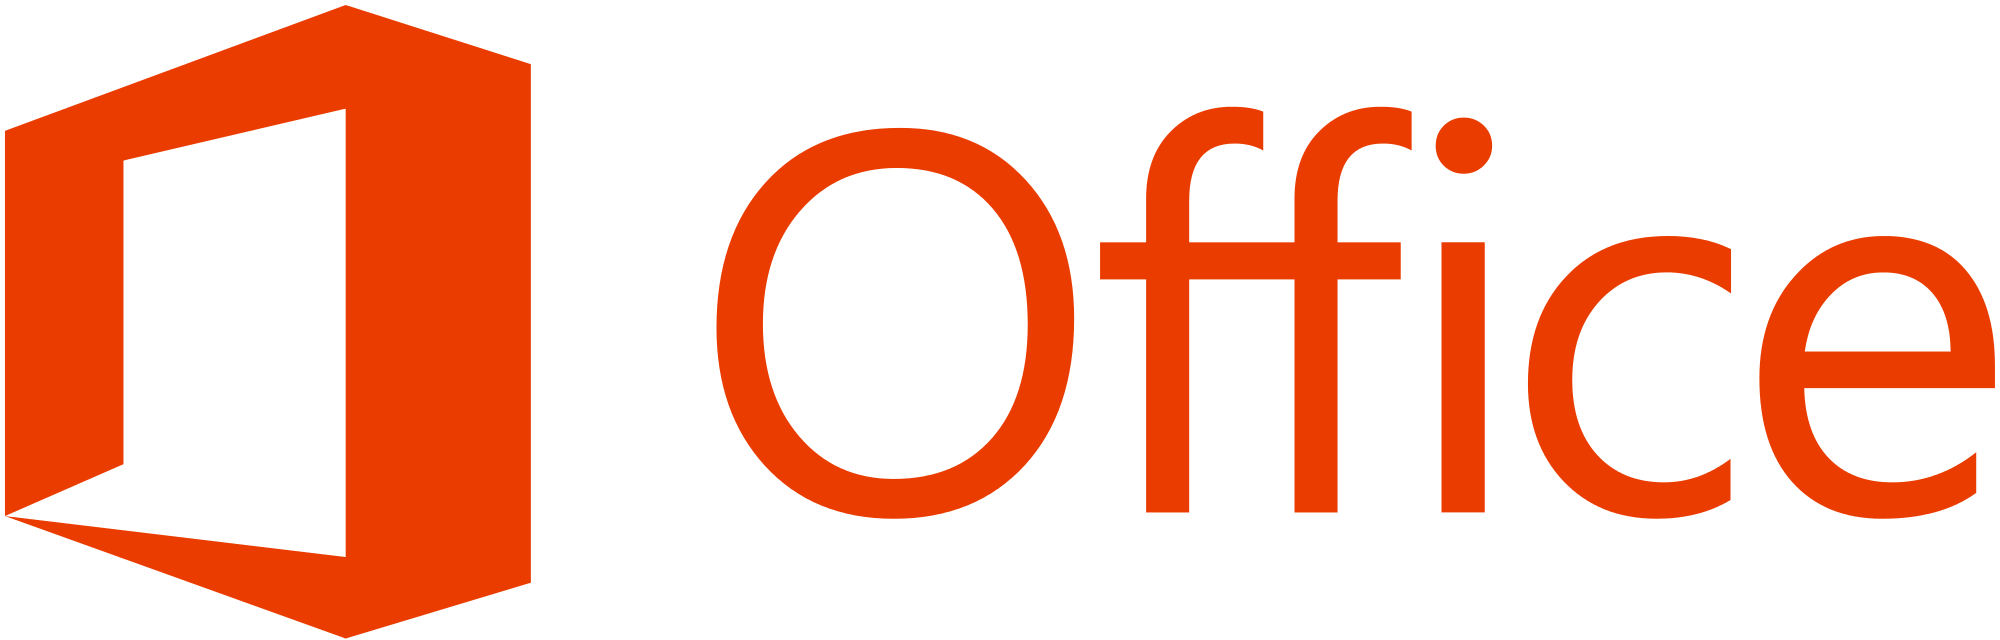 Microsoft Office 2013 Logo And Wordmark Svg